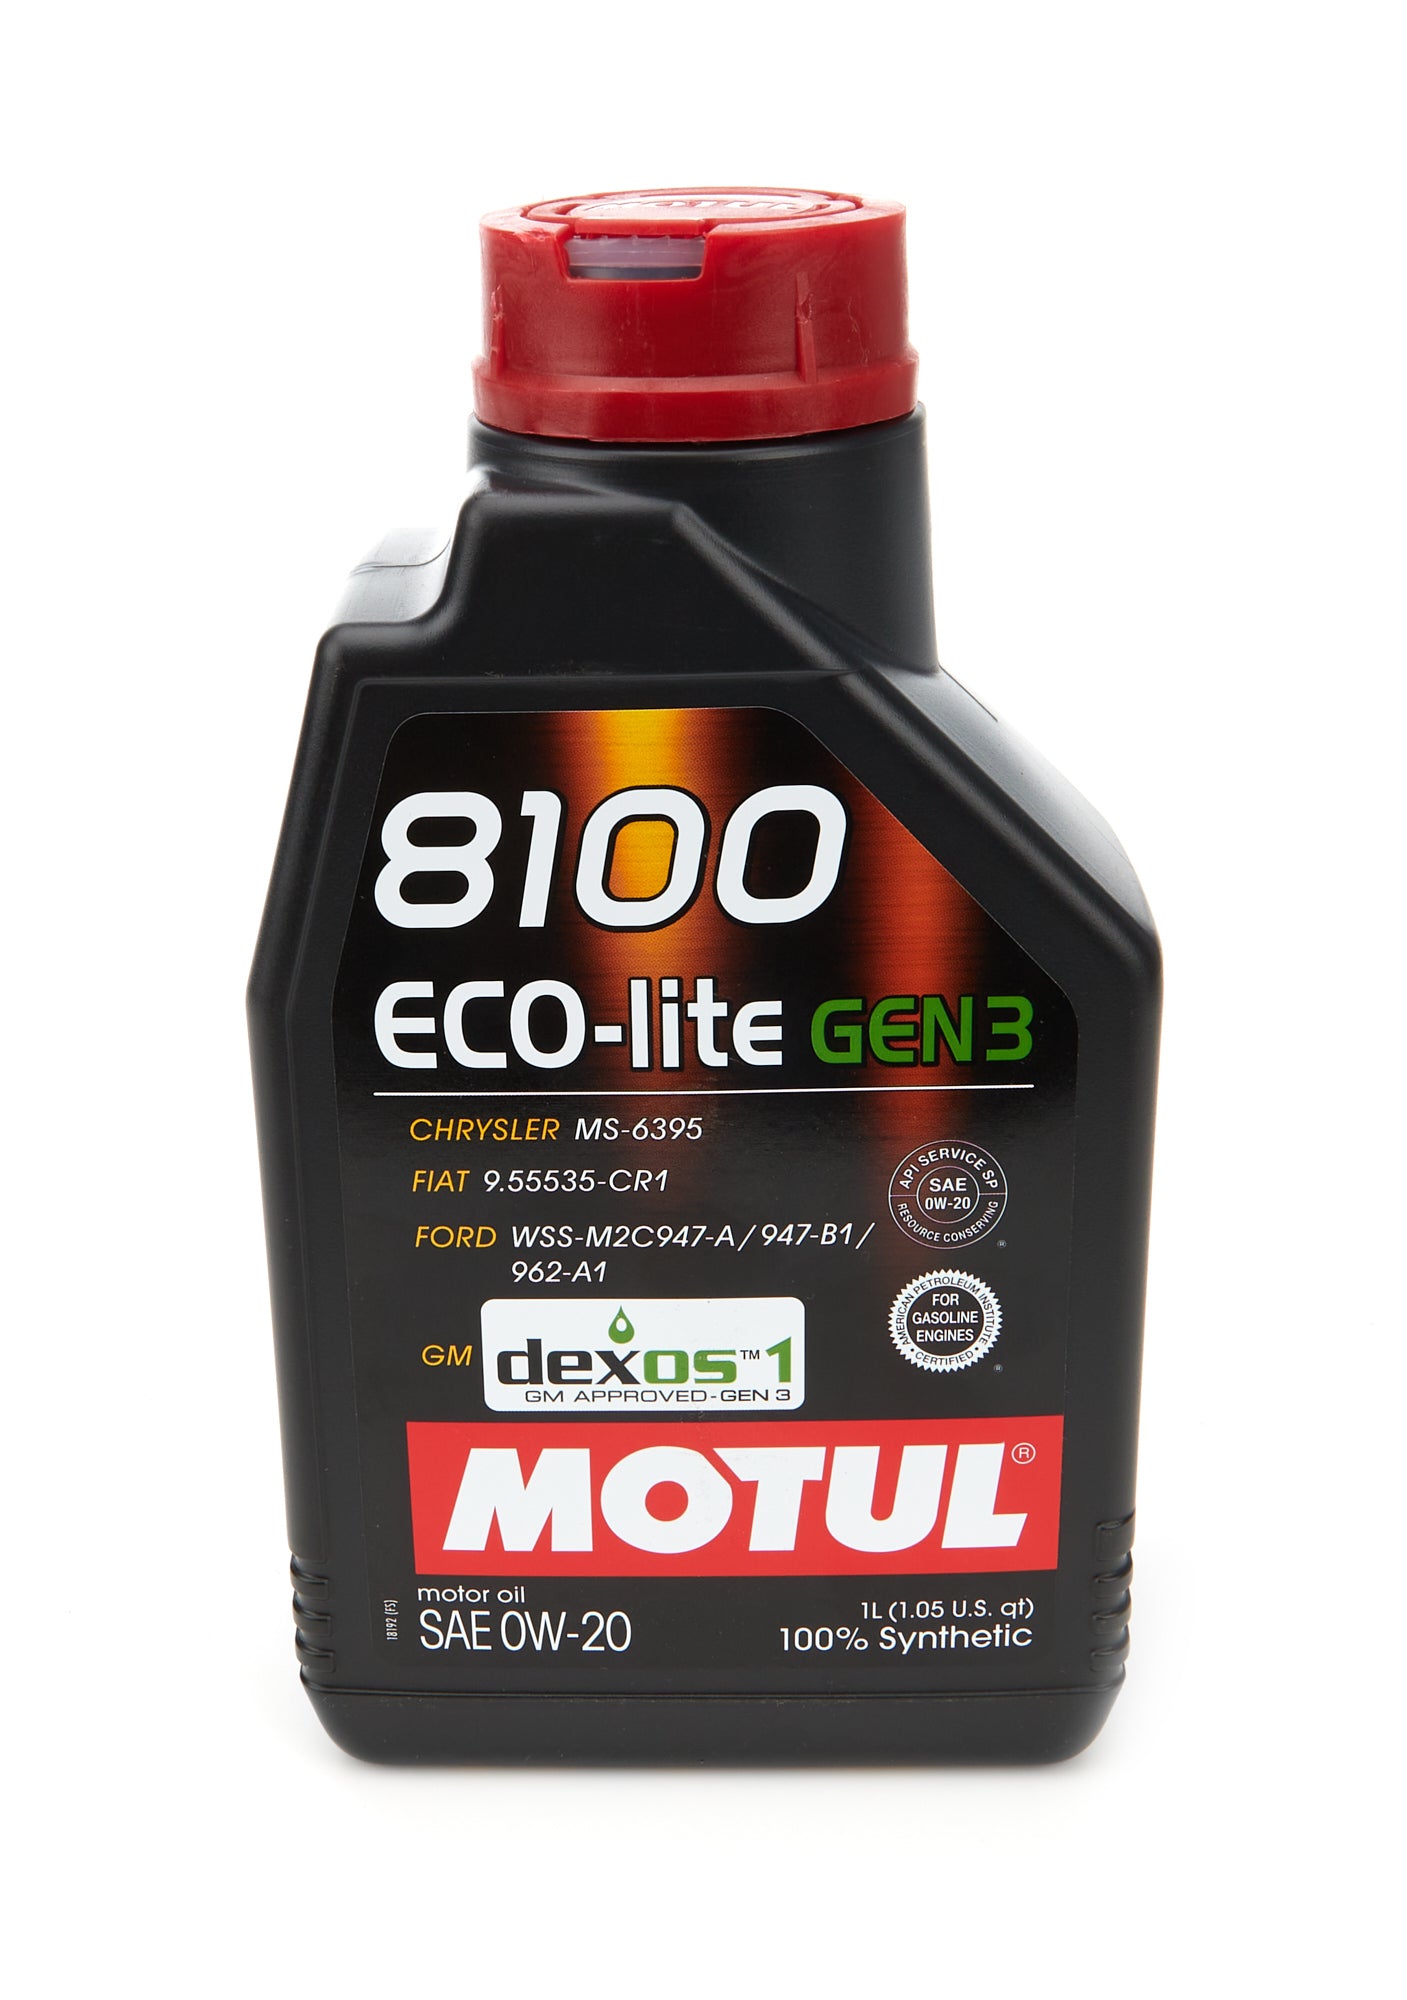 Motul 8100 Eco-Lite Gen3 0w20 1 Liter Oils, Fluids and Additives Motor Oil main image